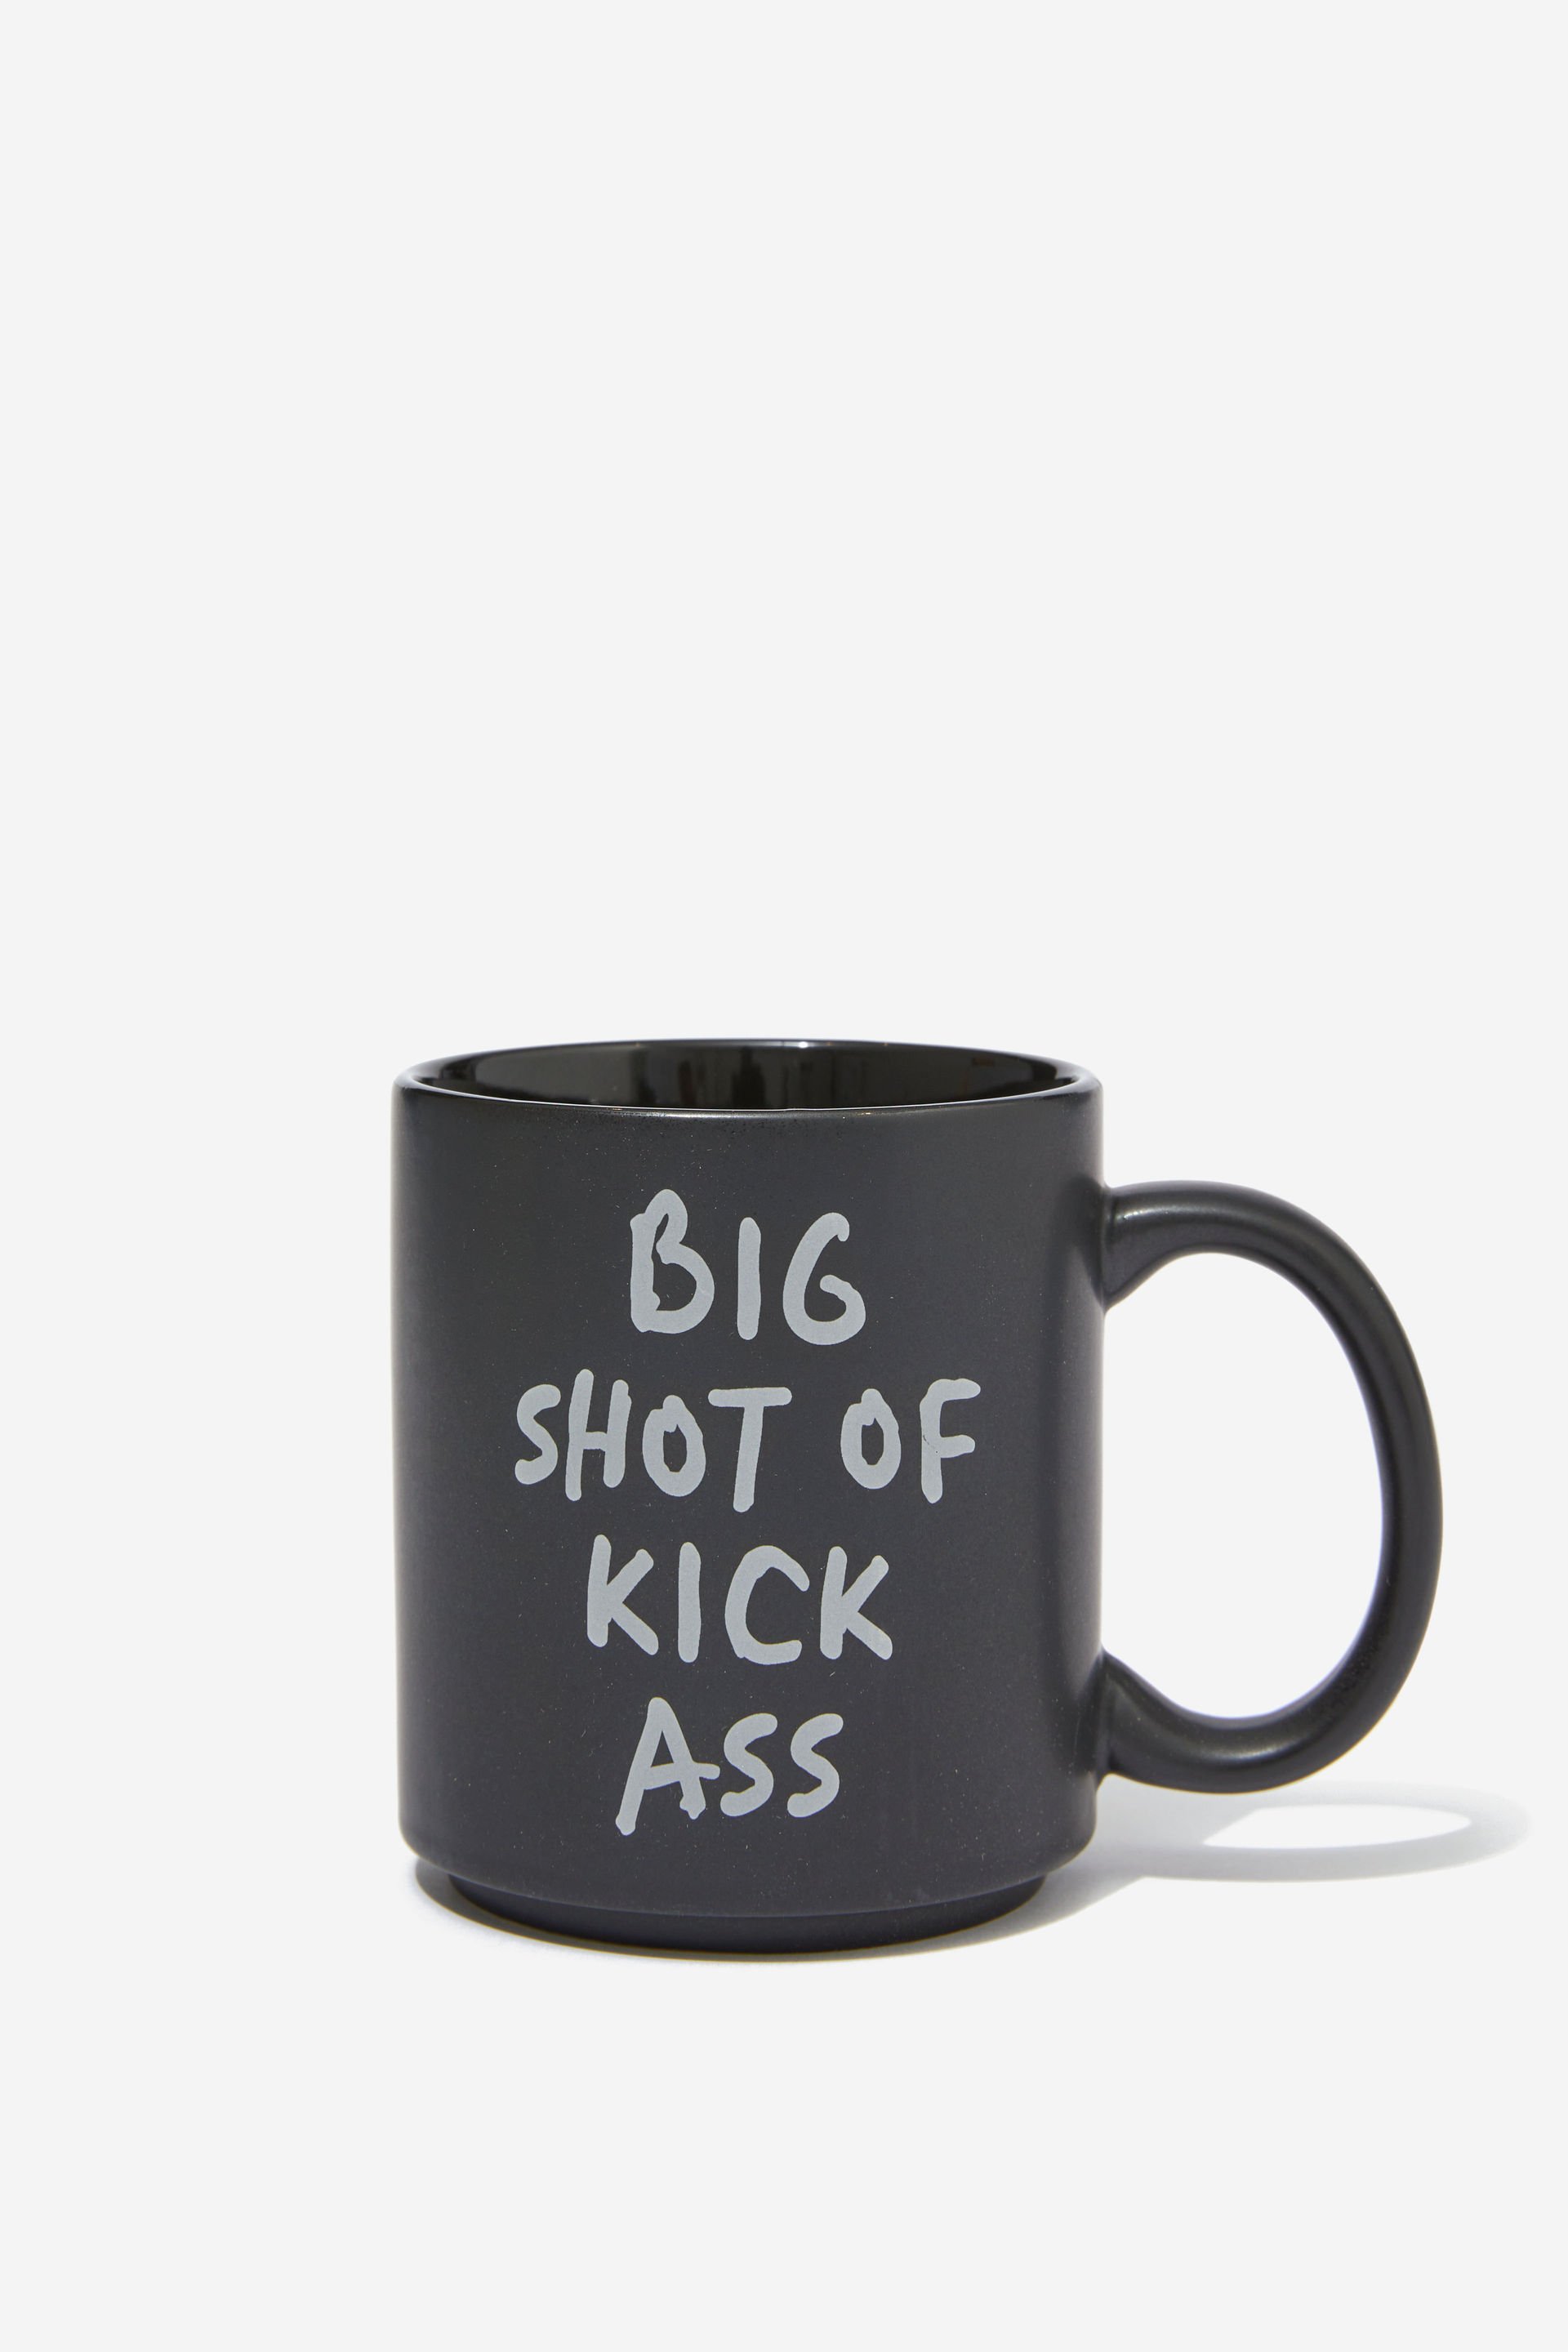 Typo - Daily Mug - Big shot of kick ass!